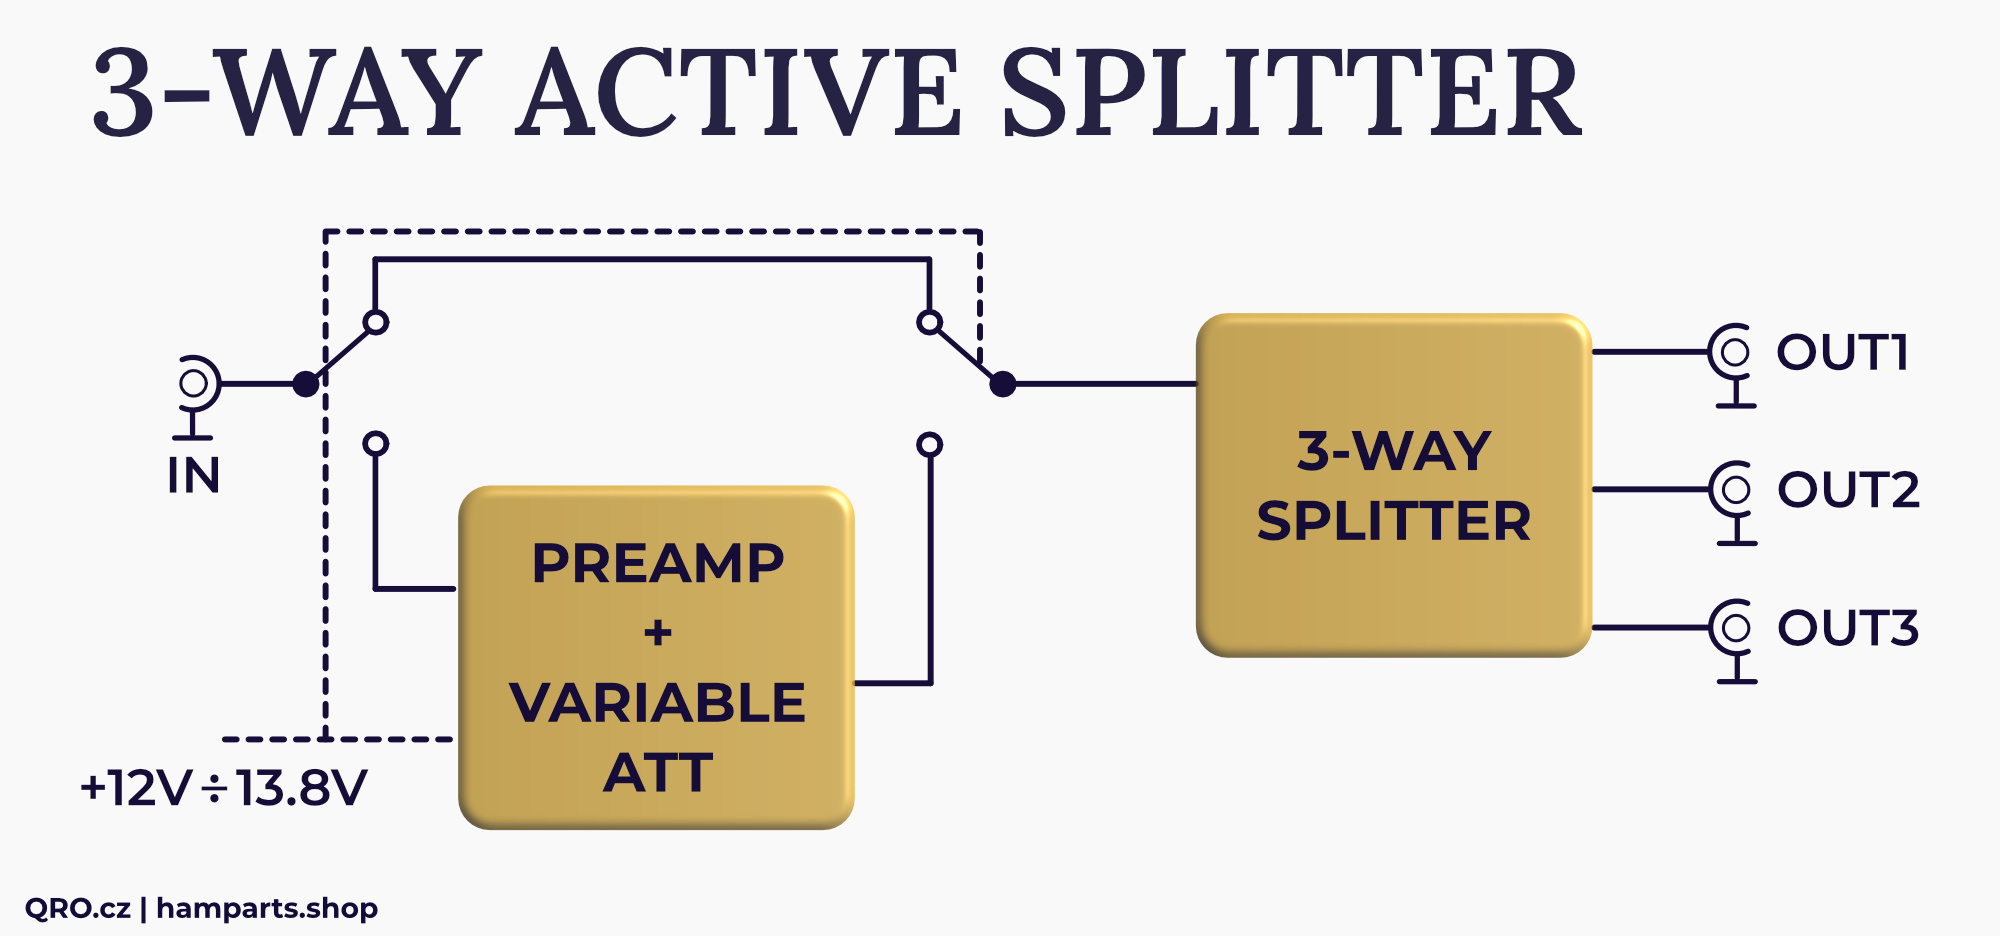 3way active splitter by qro.cz hamparts.shop